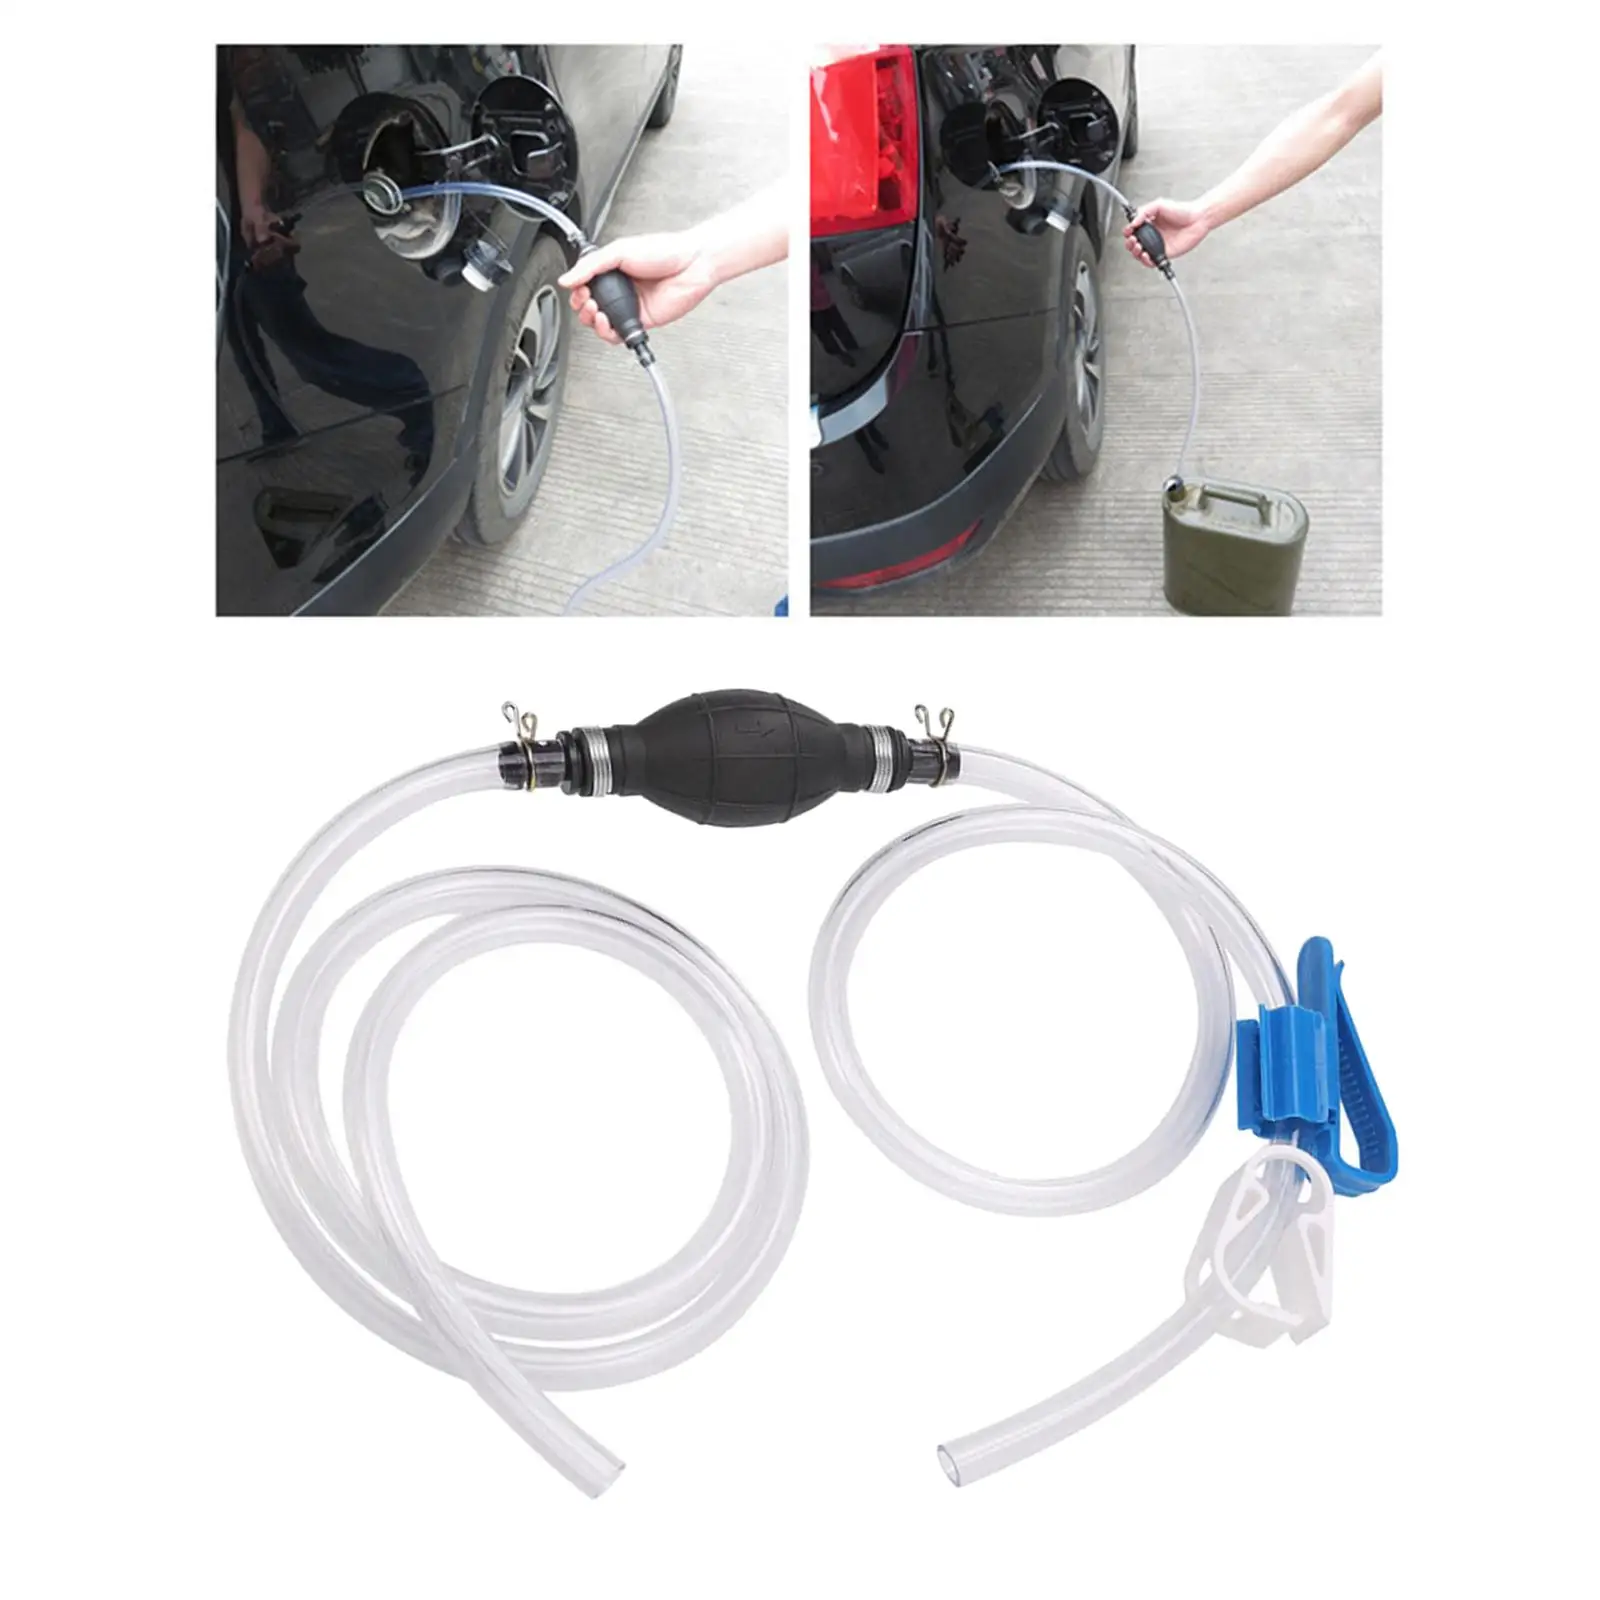 Fuel Transfer Pump, Car Fuel Hand Siphon Pump, with Total 2M Hose, Durable